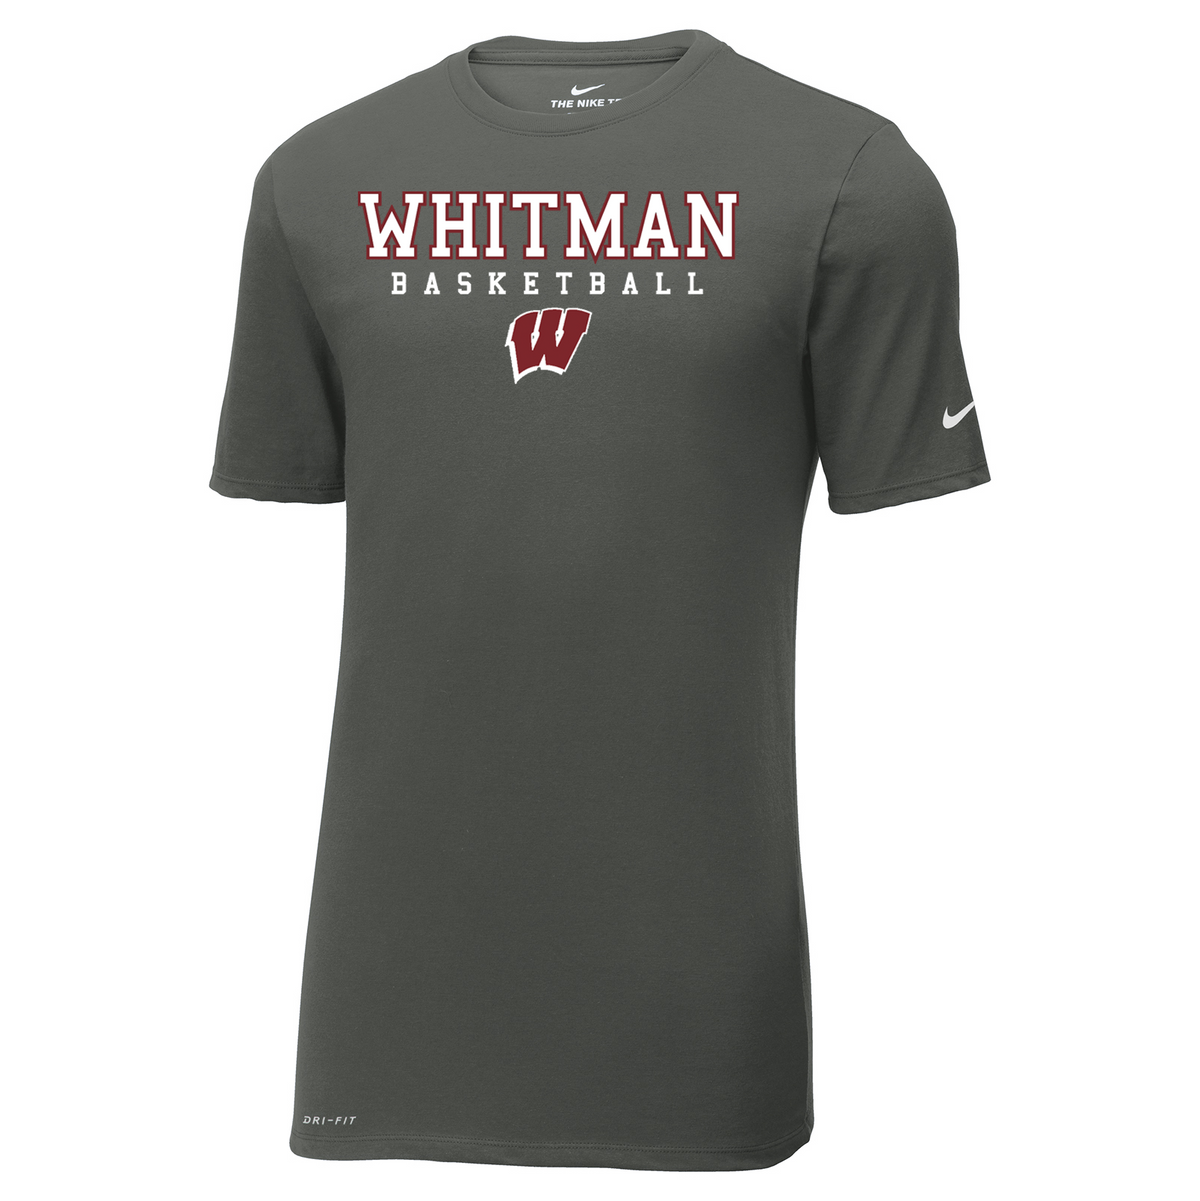 Whitman Basketball Nike Dri-FIT Tee